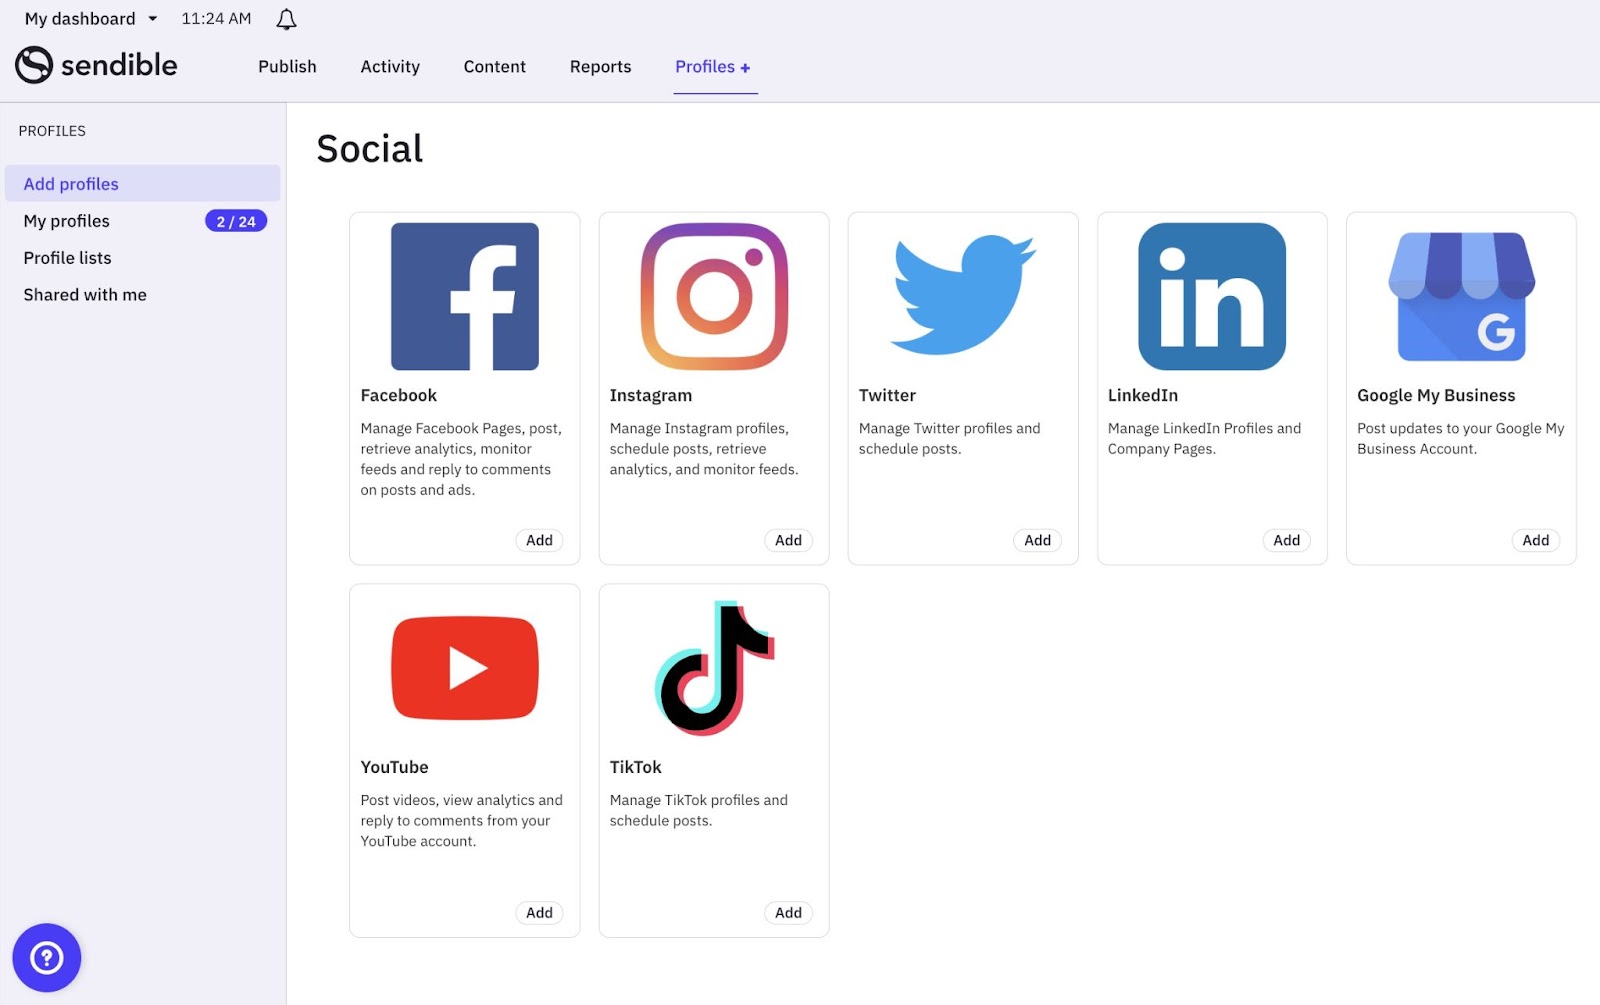 Sendible interface showing social media tiles - Facebook, Instagram, Twitter, LinkedIn, Google My Business, YouTube and TikTok